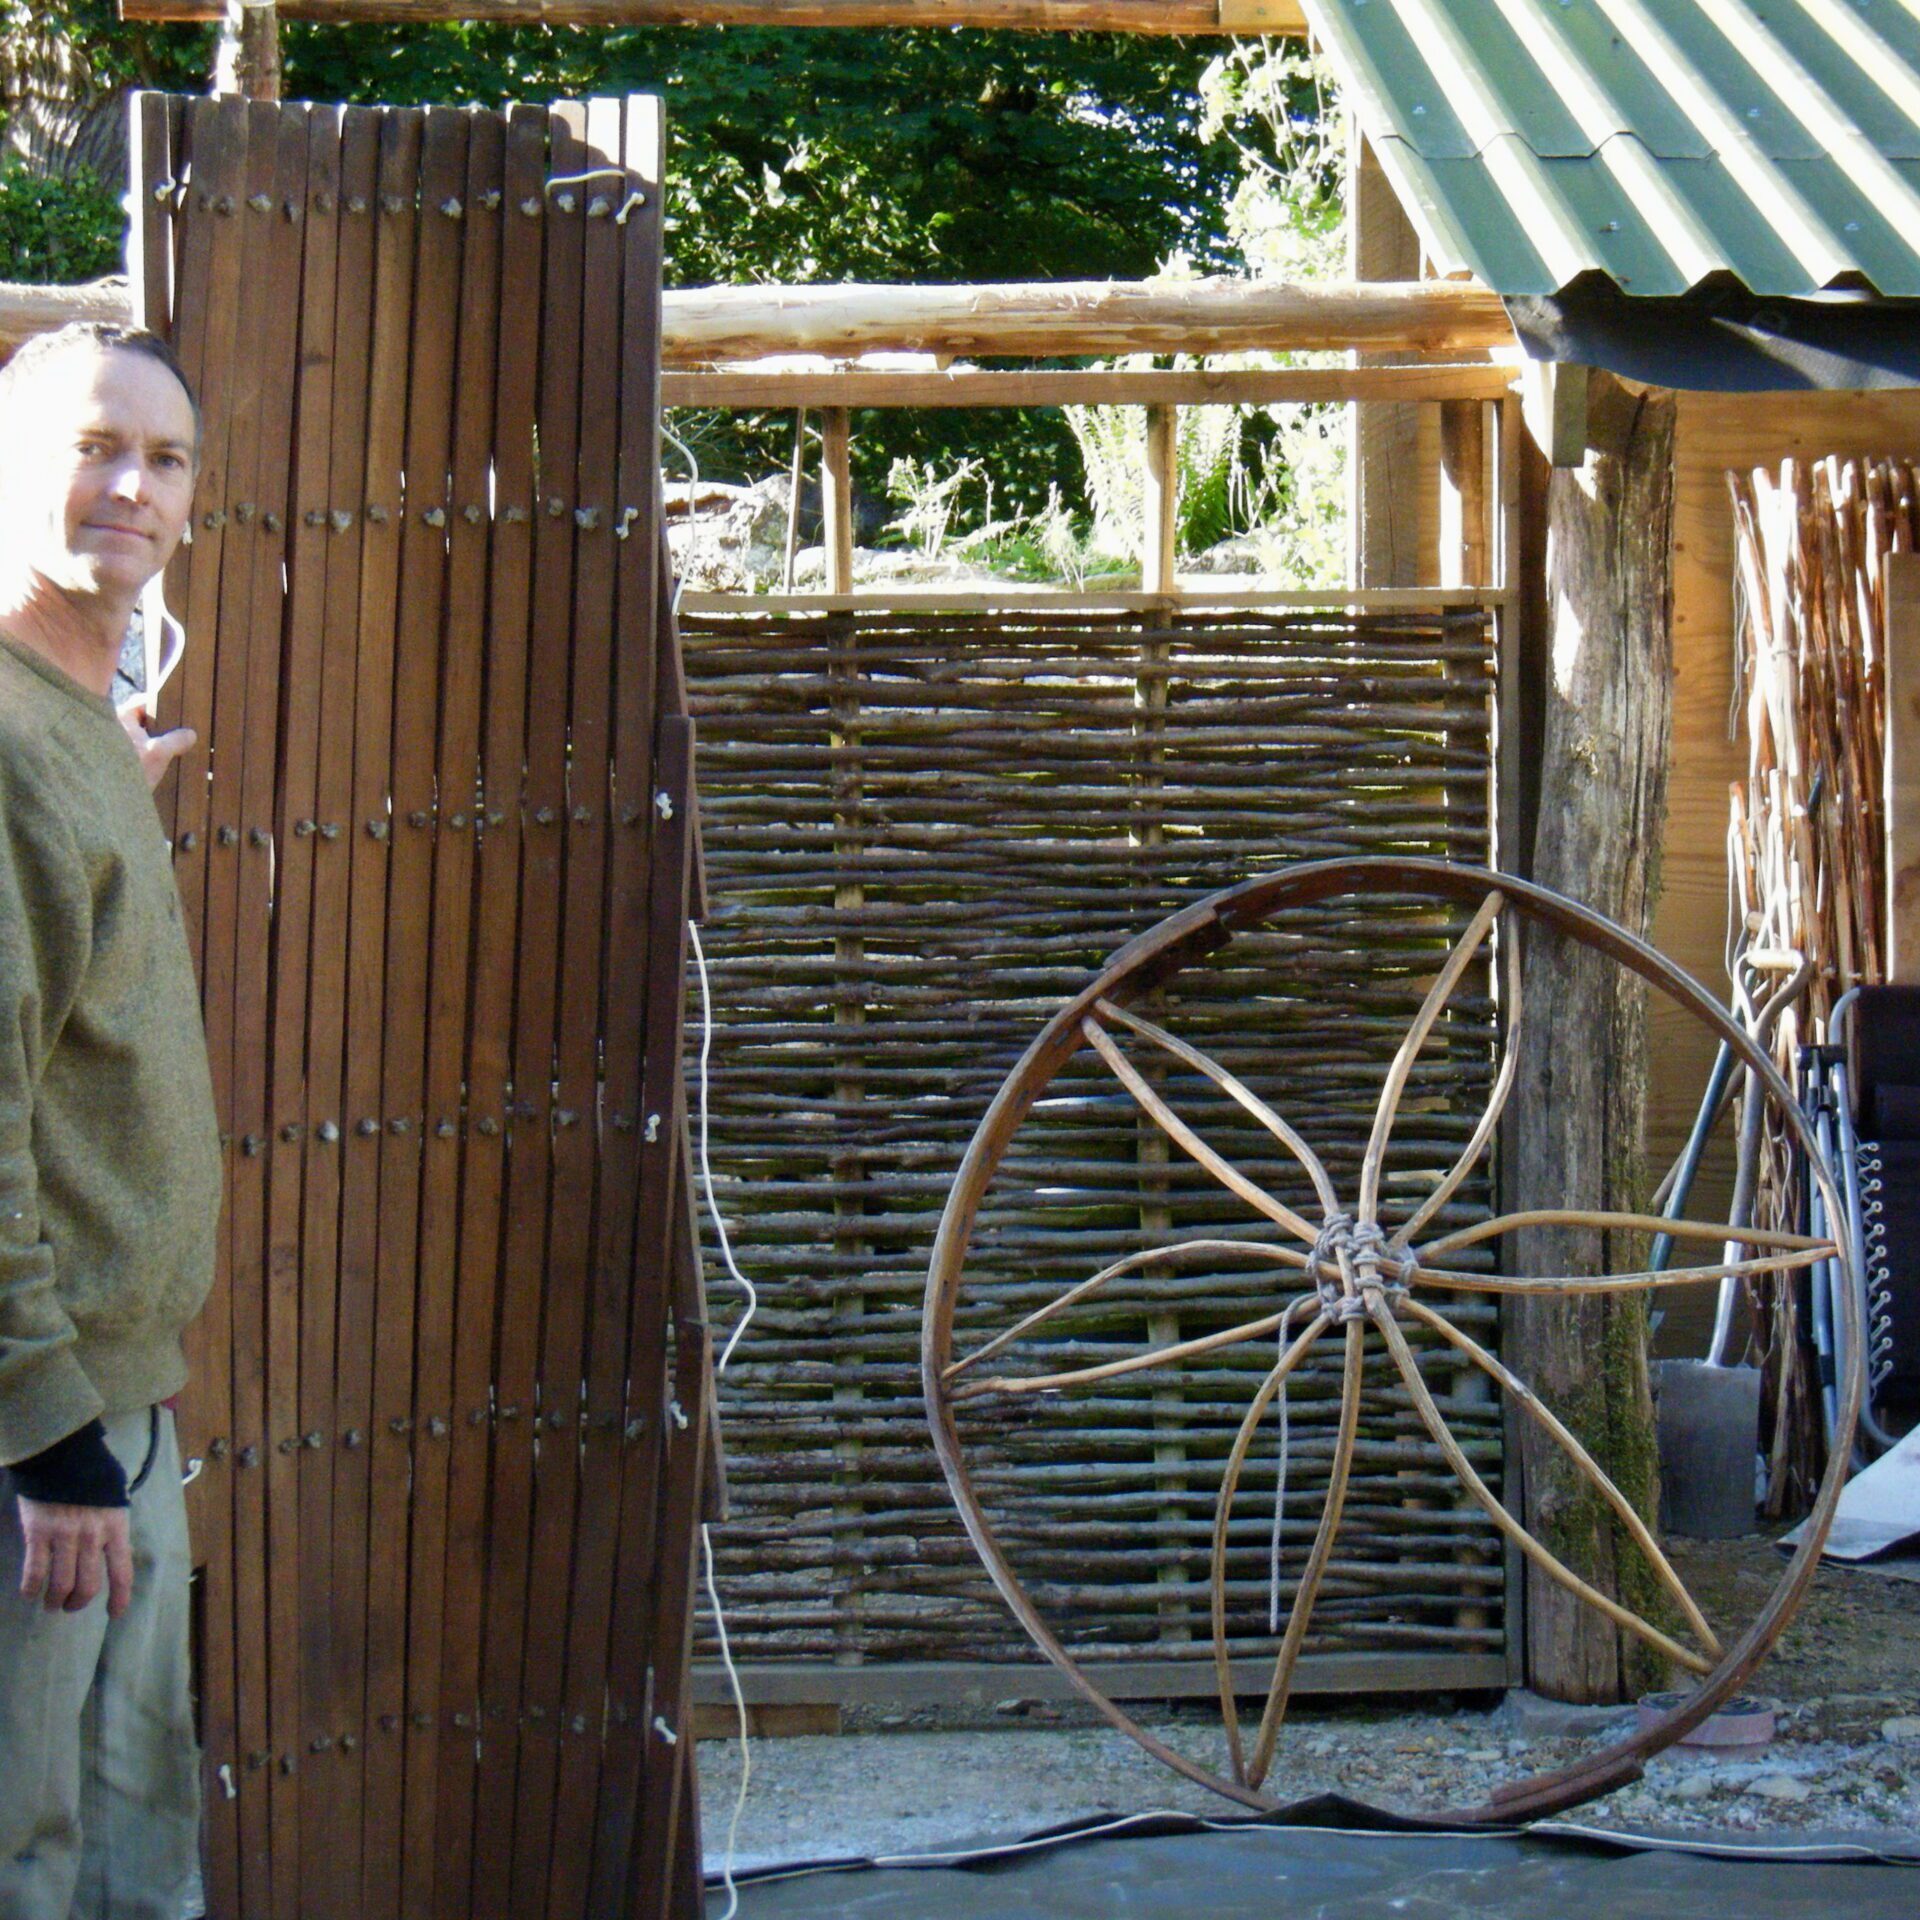 Yurt frame and wheel